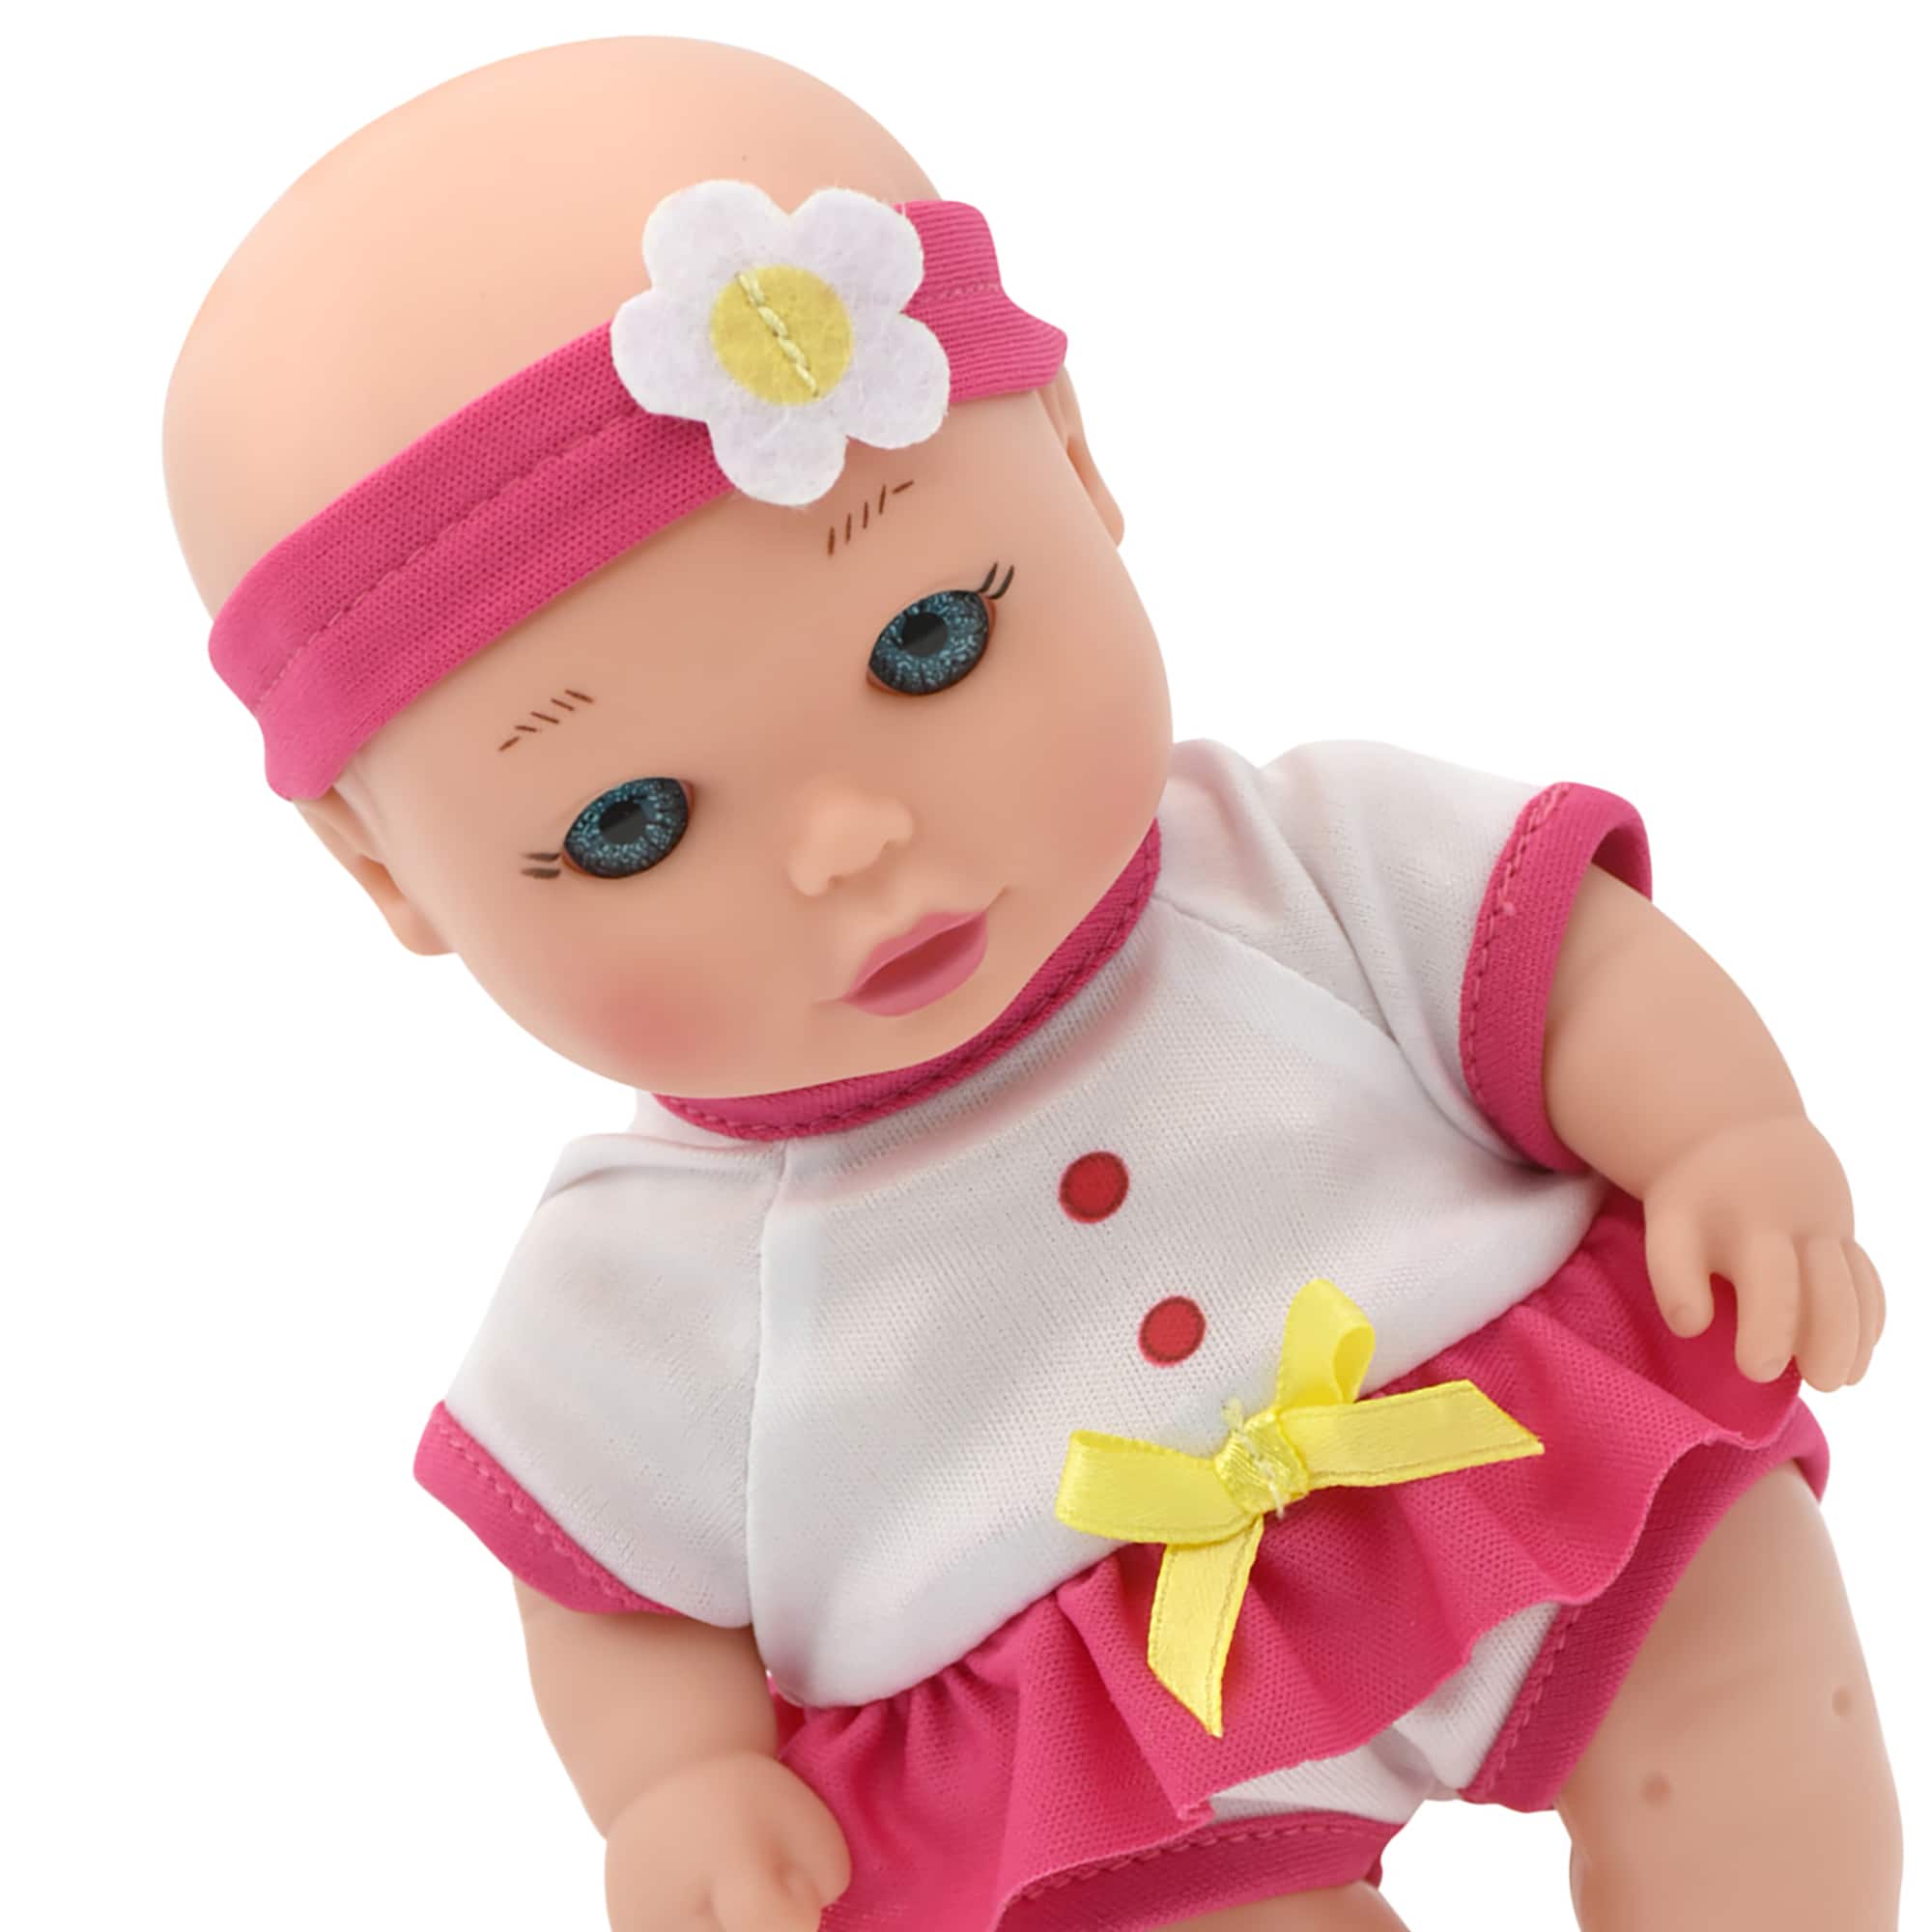 New Adventures Magic Nursery&#x2122; Love Buckets Bath Safe Baby Doll Playset